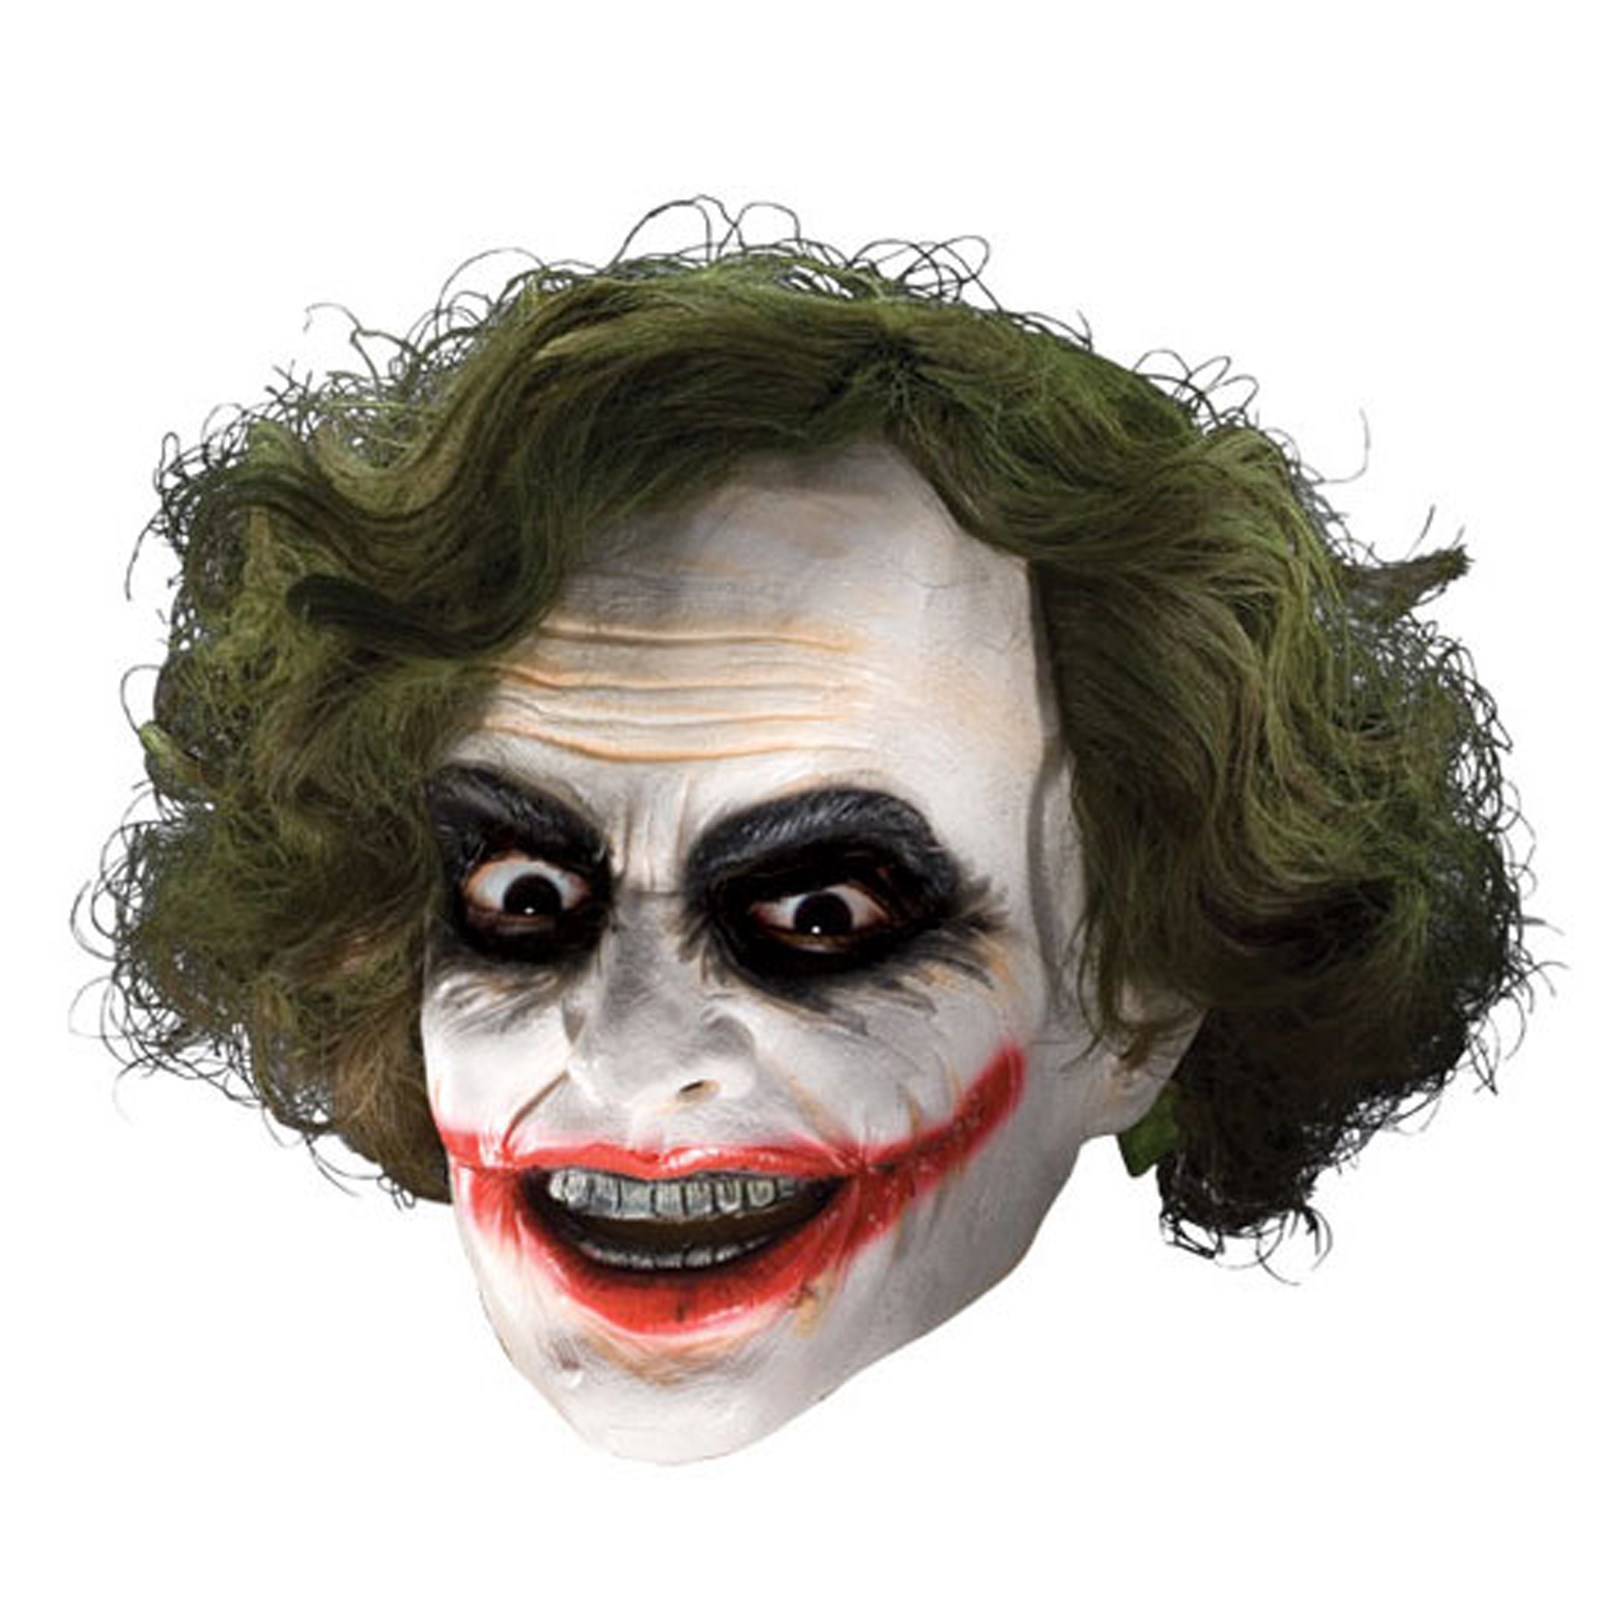 Batman Dark Knight Child Joker 3/4 Vinyl Mask with Hair